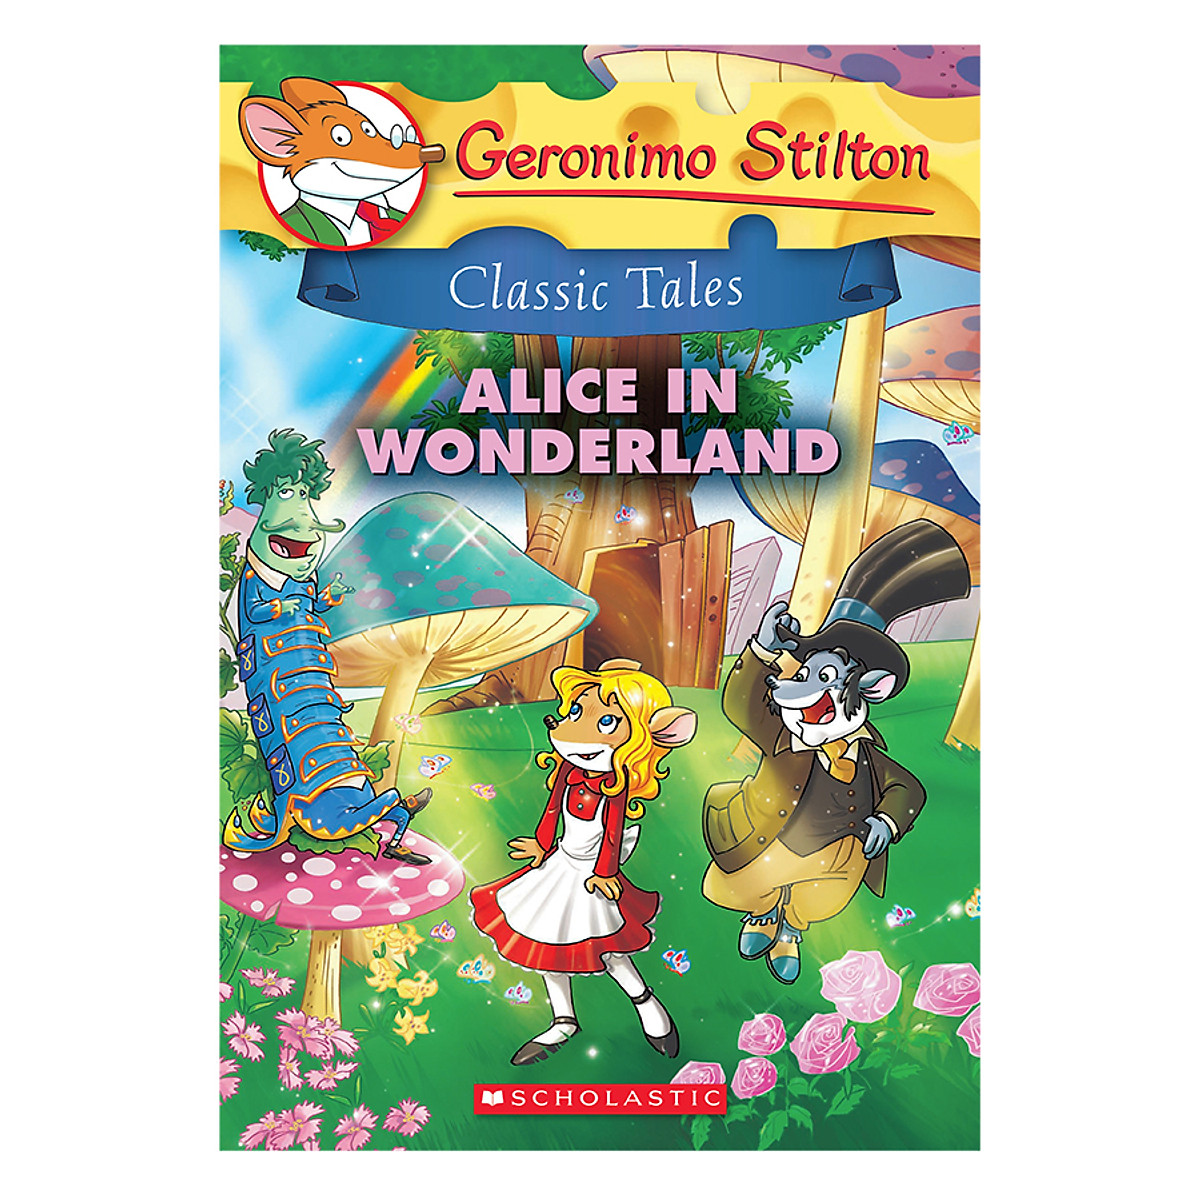 Geronimo Stilton Classic Tales 5: Alice In Wonderland